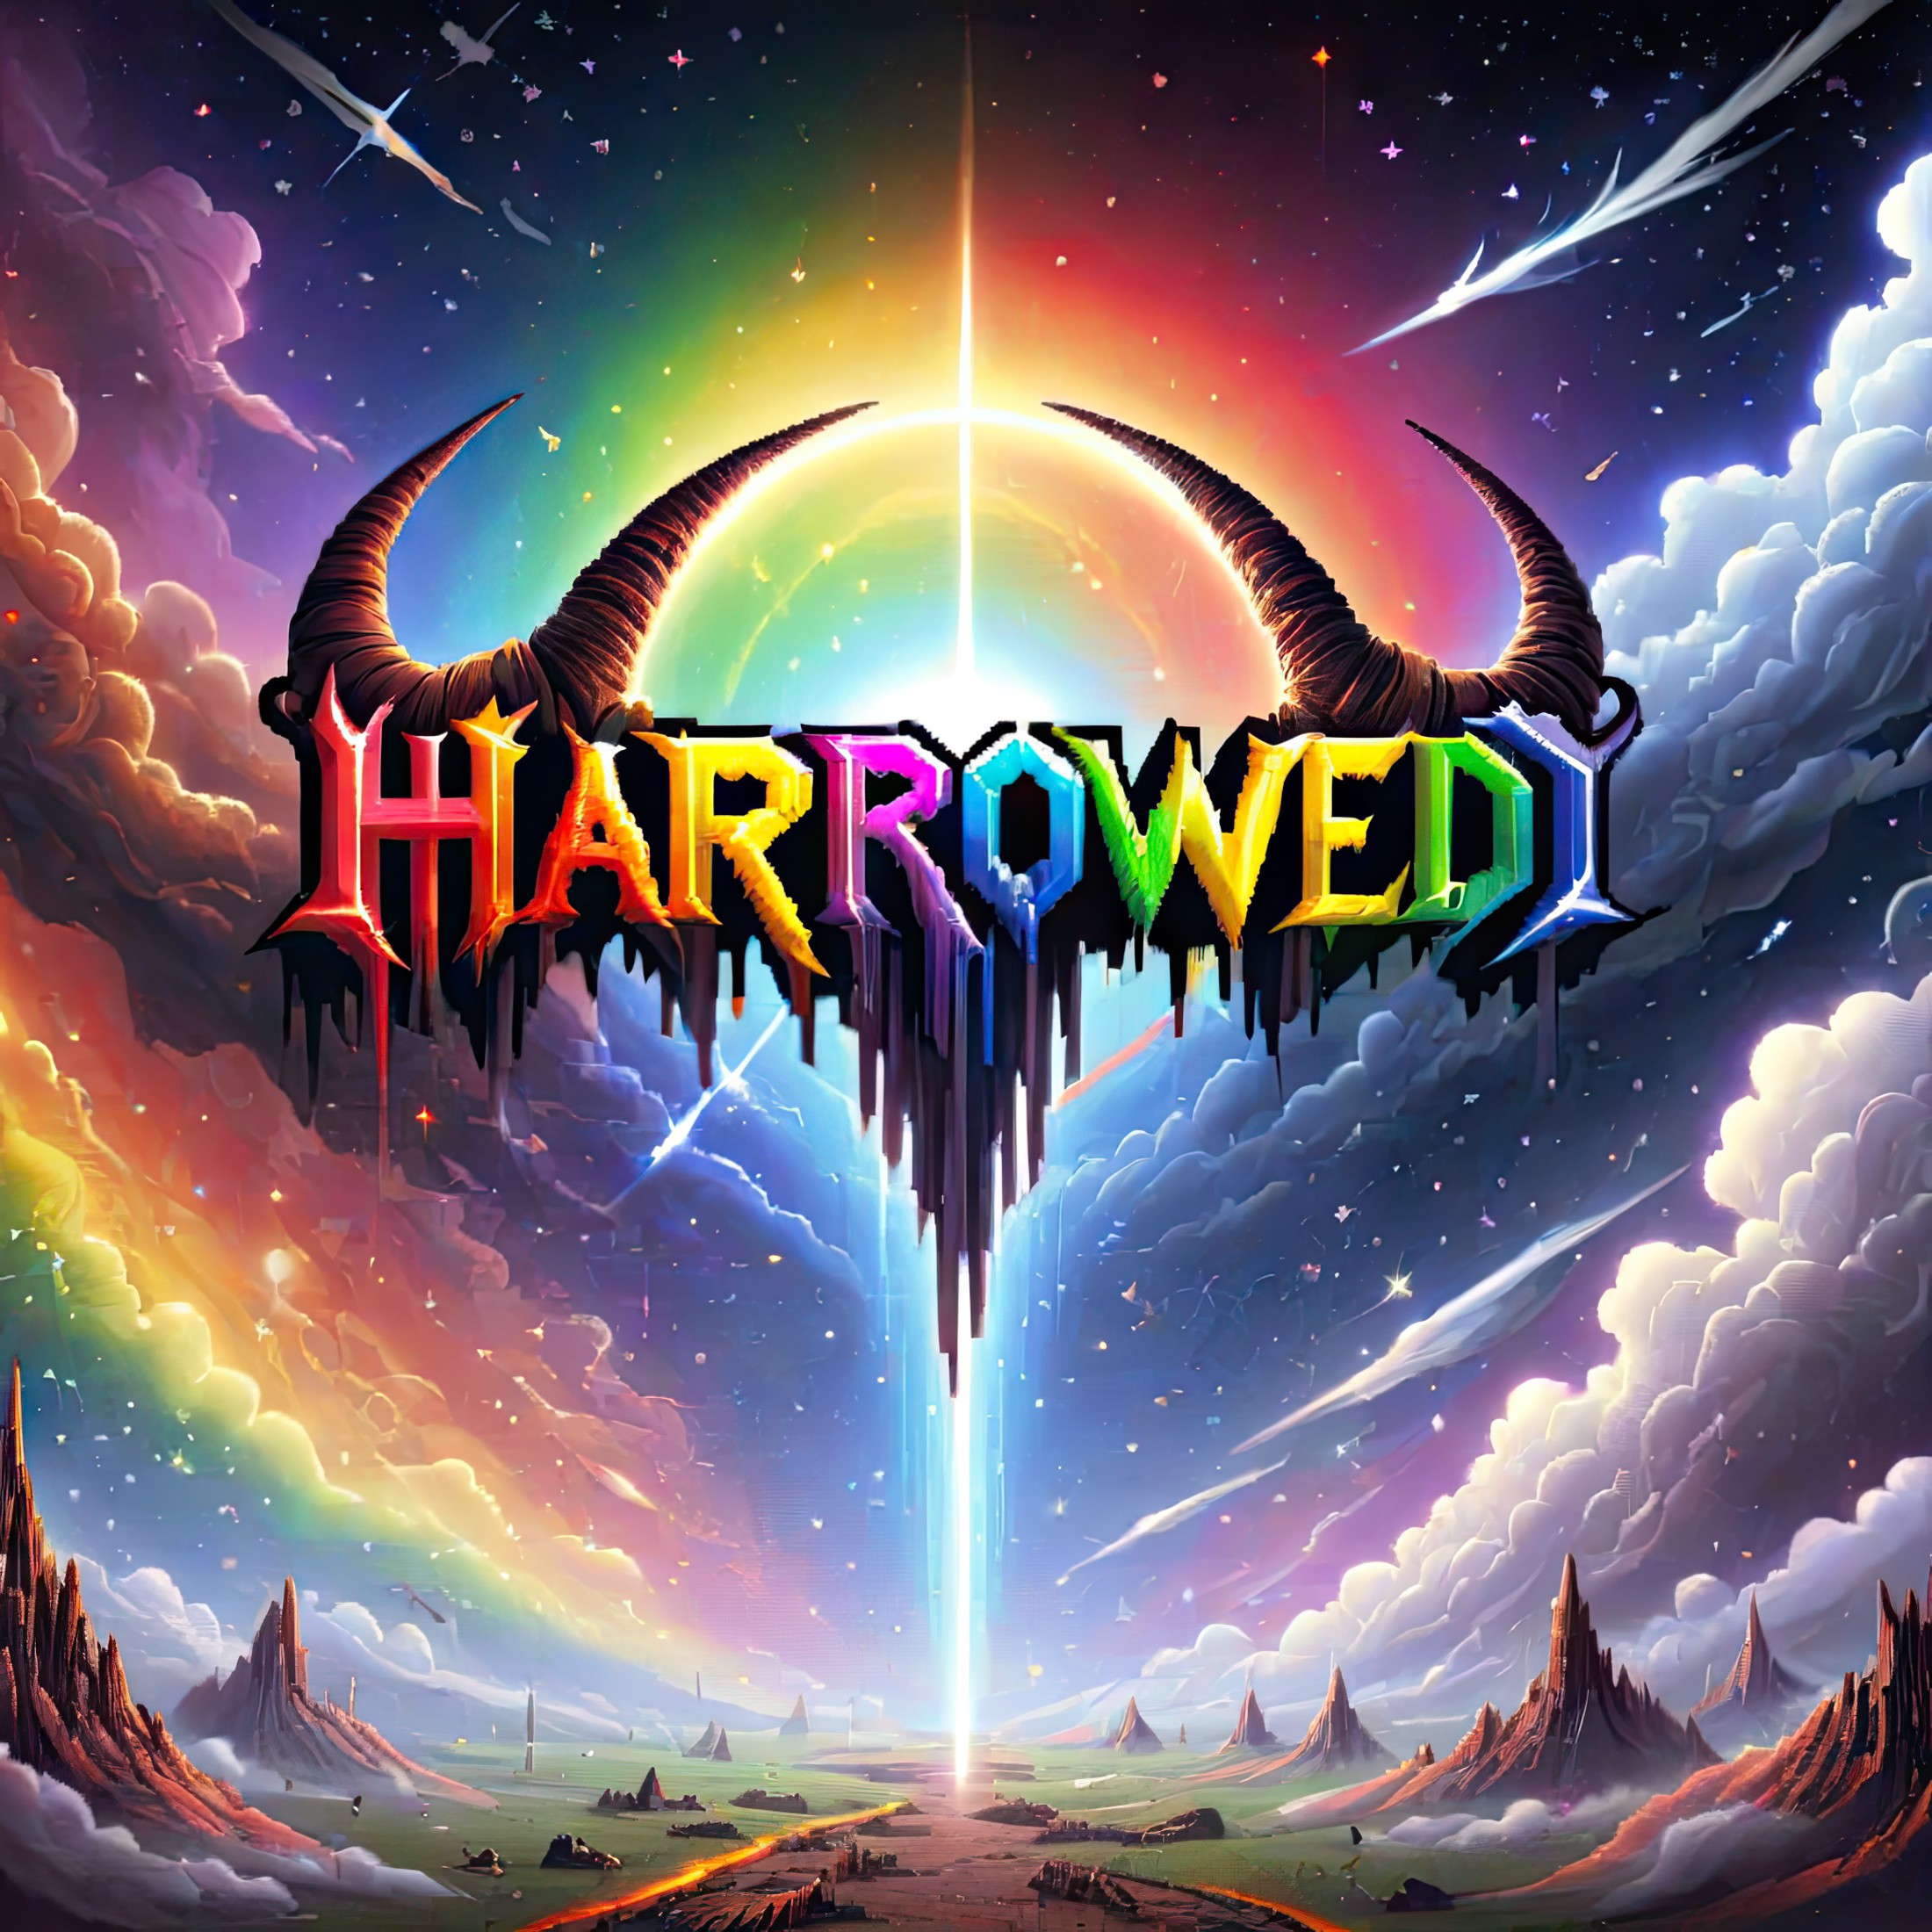 (HarroweD text logo), rainbow, pixel art, space, clouds, stars, horns